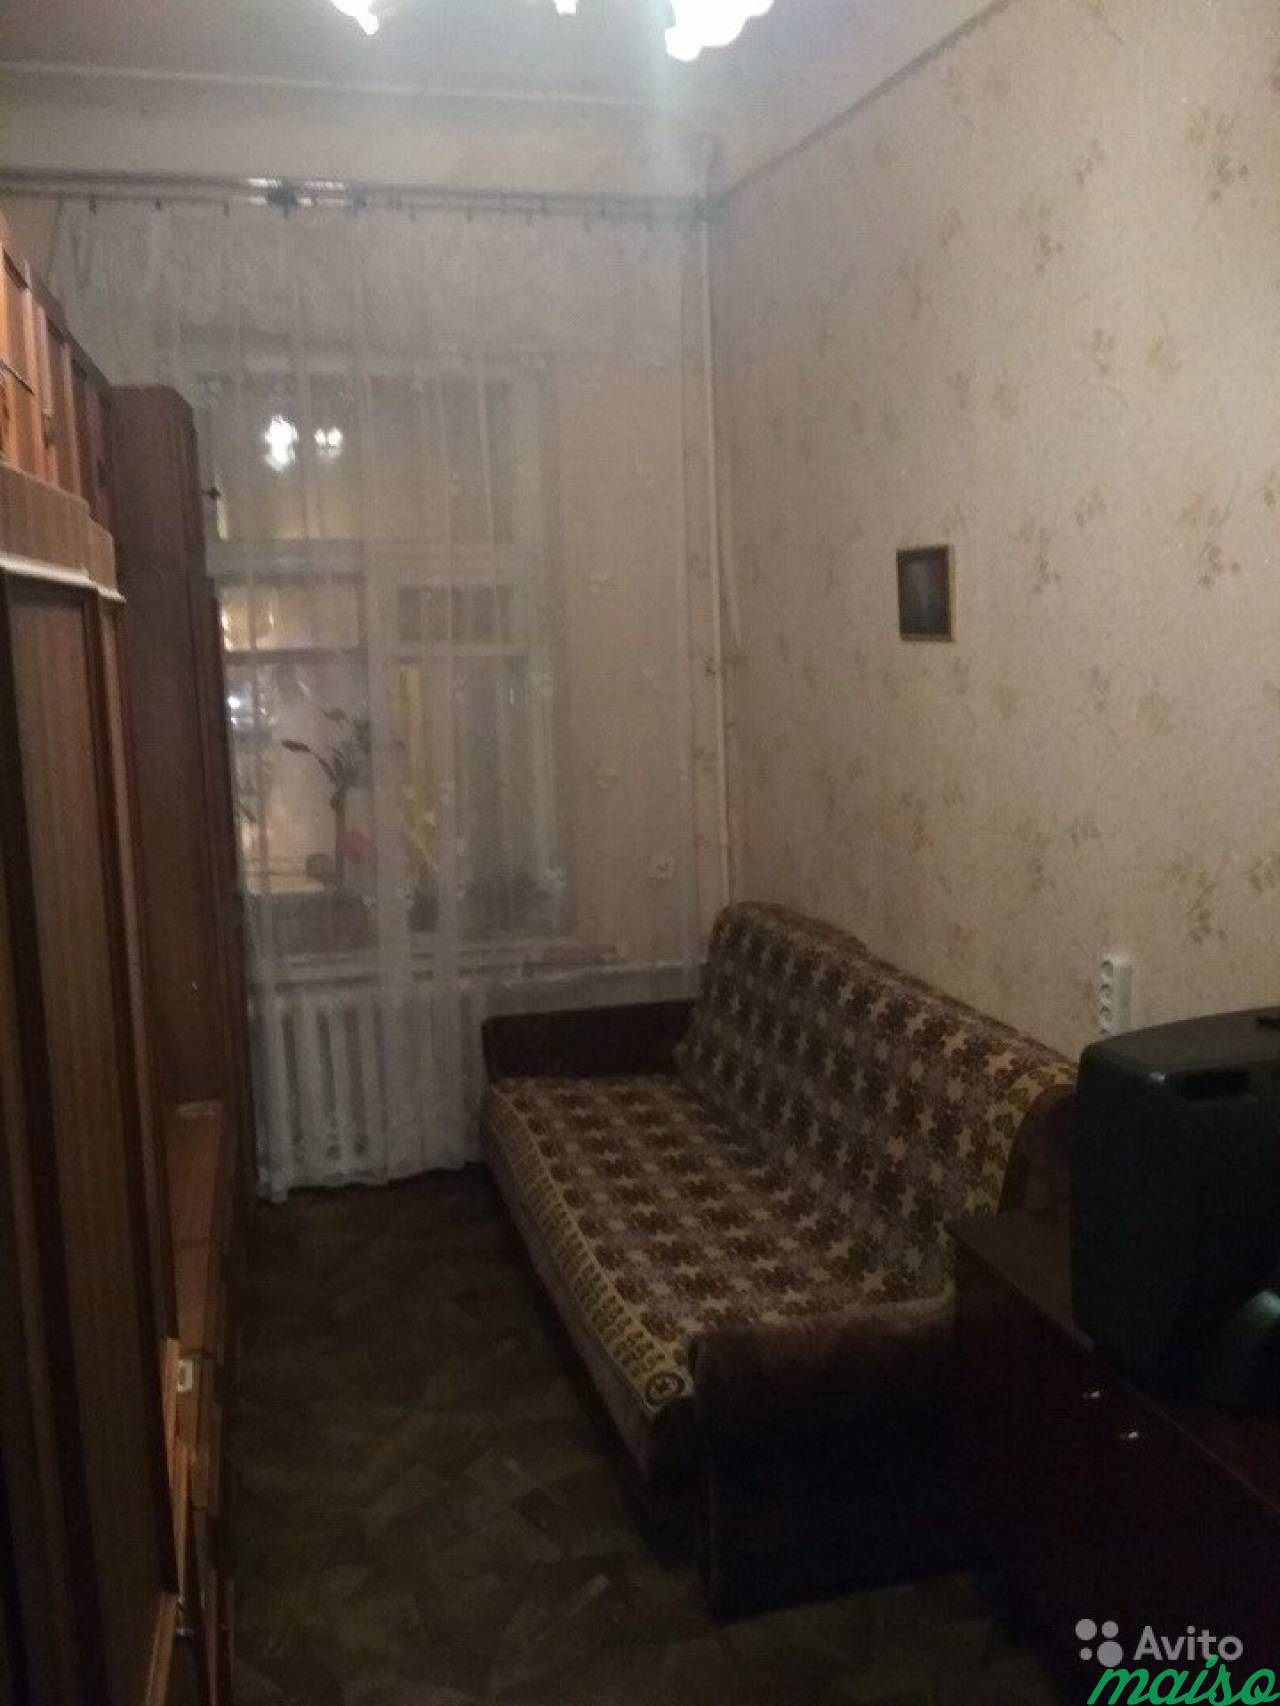 Комната 15 м² в 5-к, 2/4 эт. в Санкт-Петербурге. Фото 2